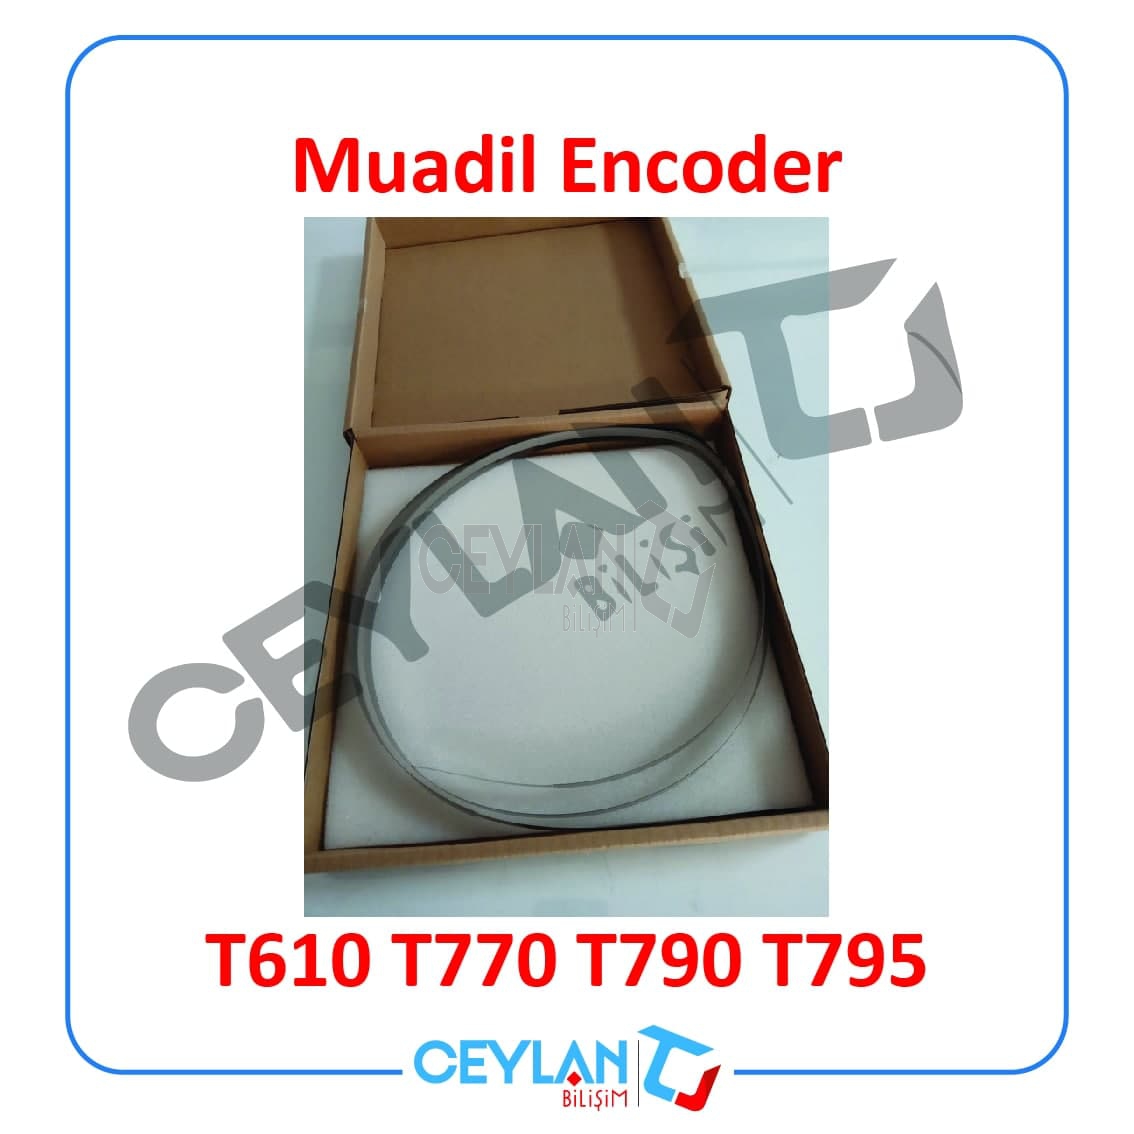 Muadil Encoder